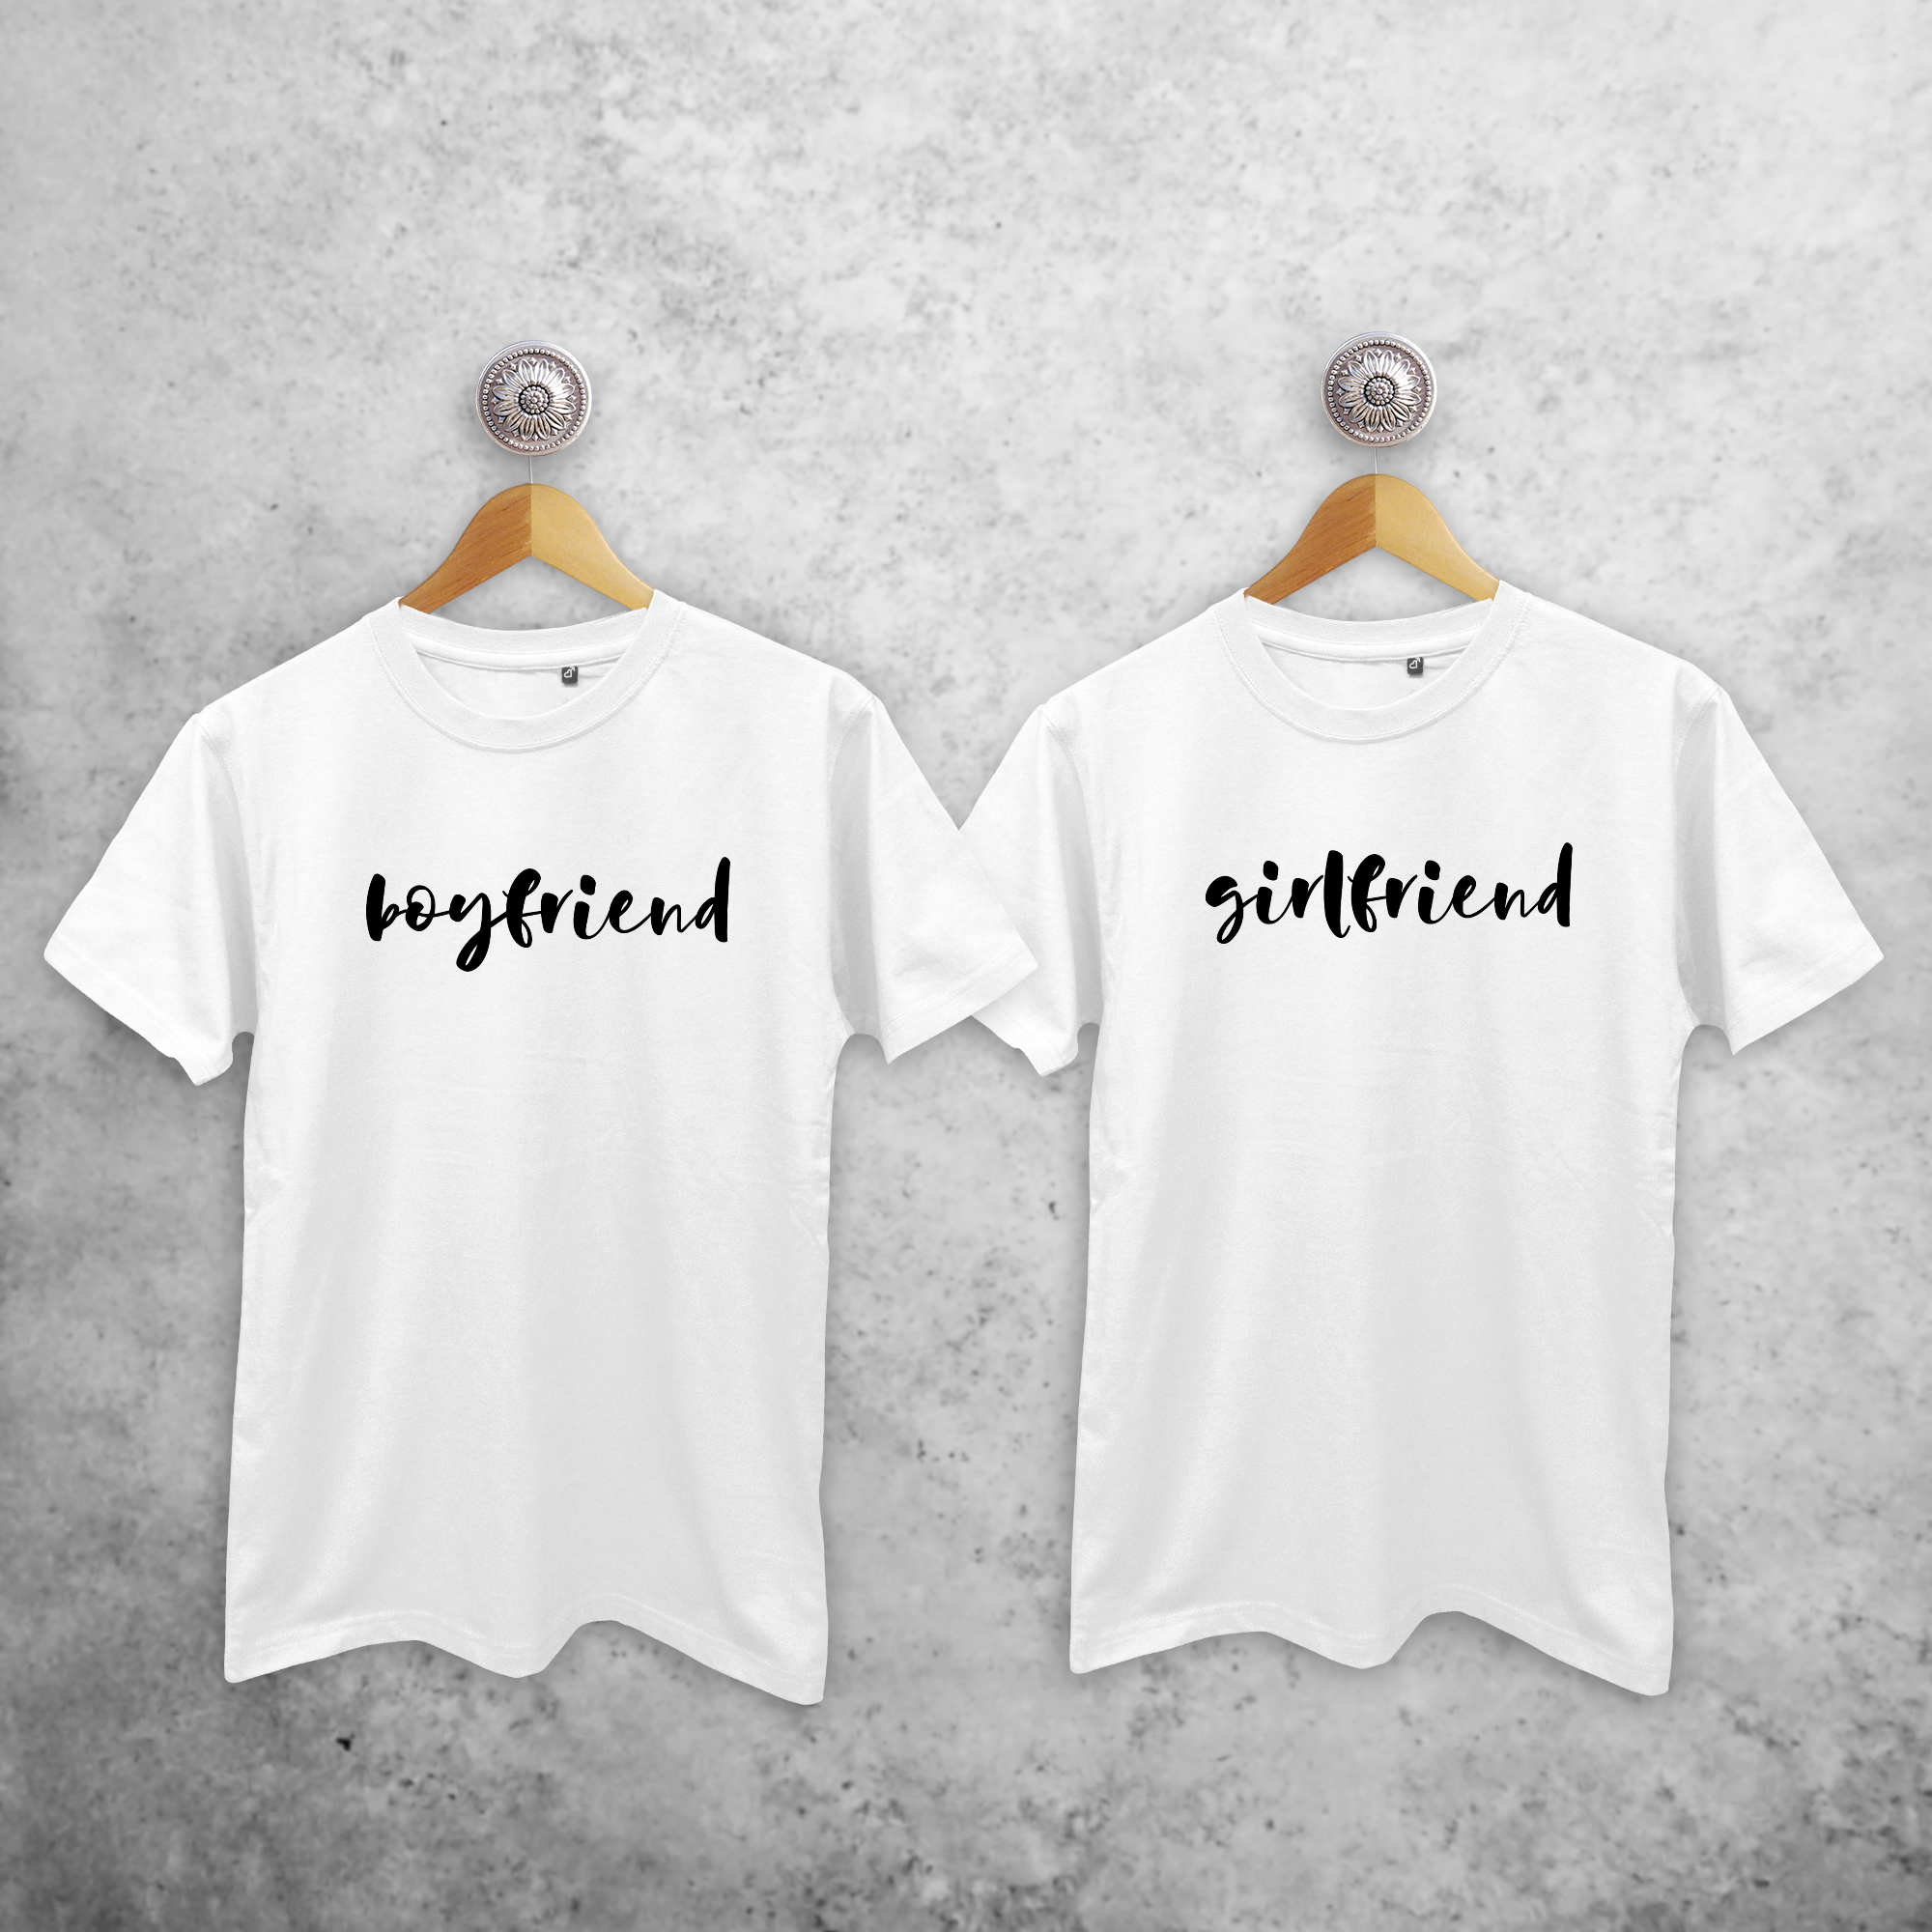 'Boyfriend' & 'Girlfriend' couples shirts